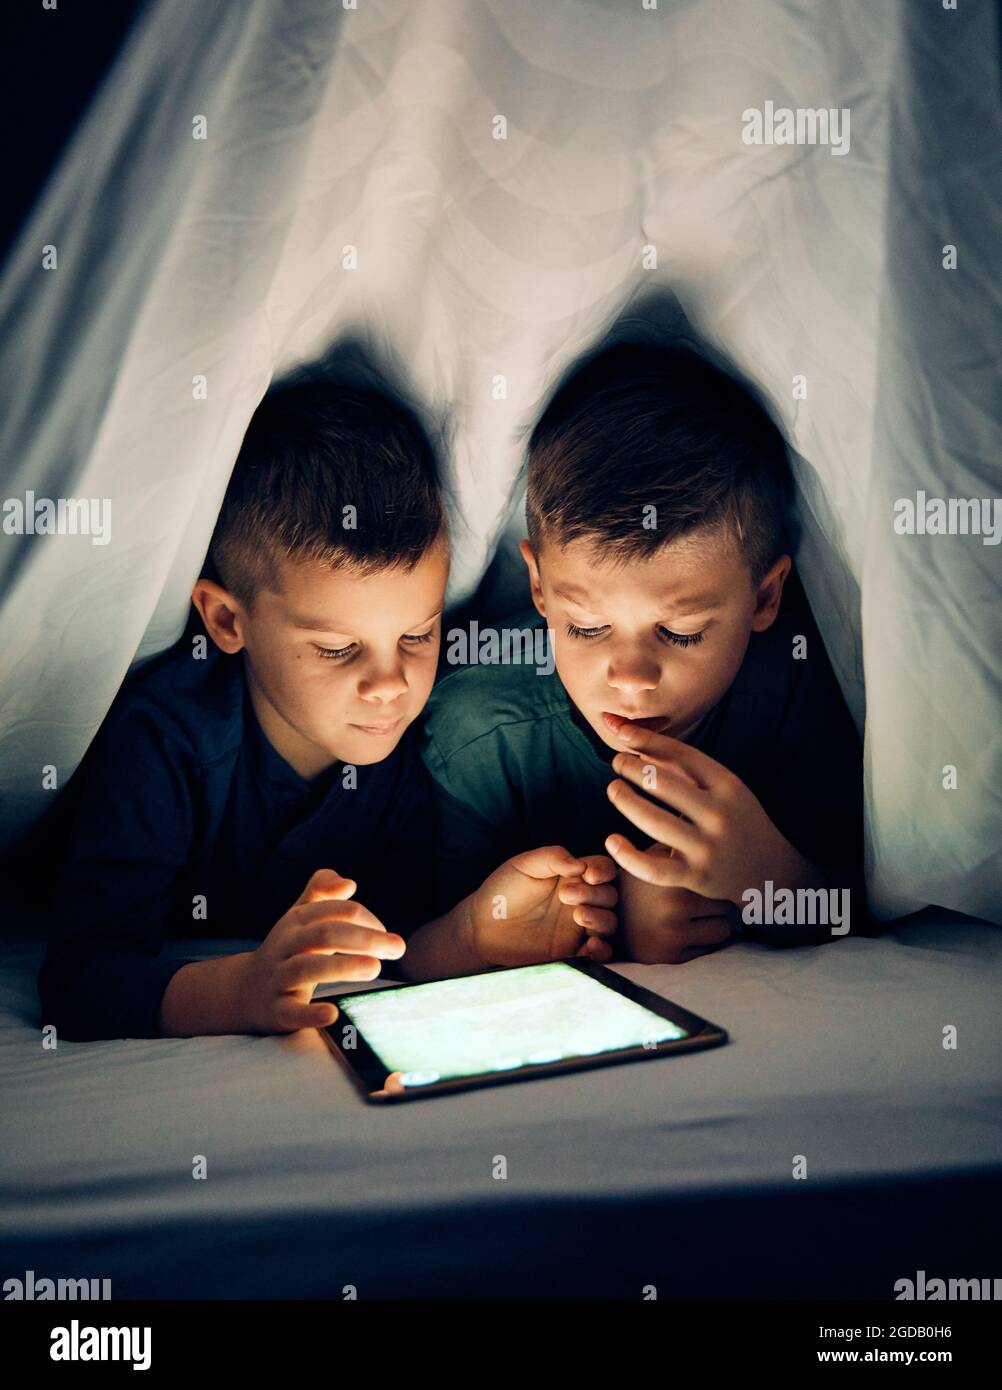 child brother friend having fun tablet laptop under sheet bedtime kid Stock Photo